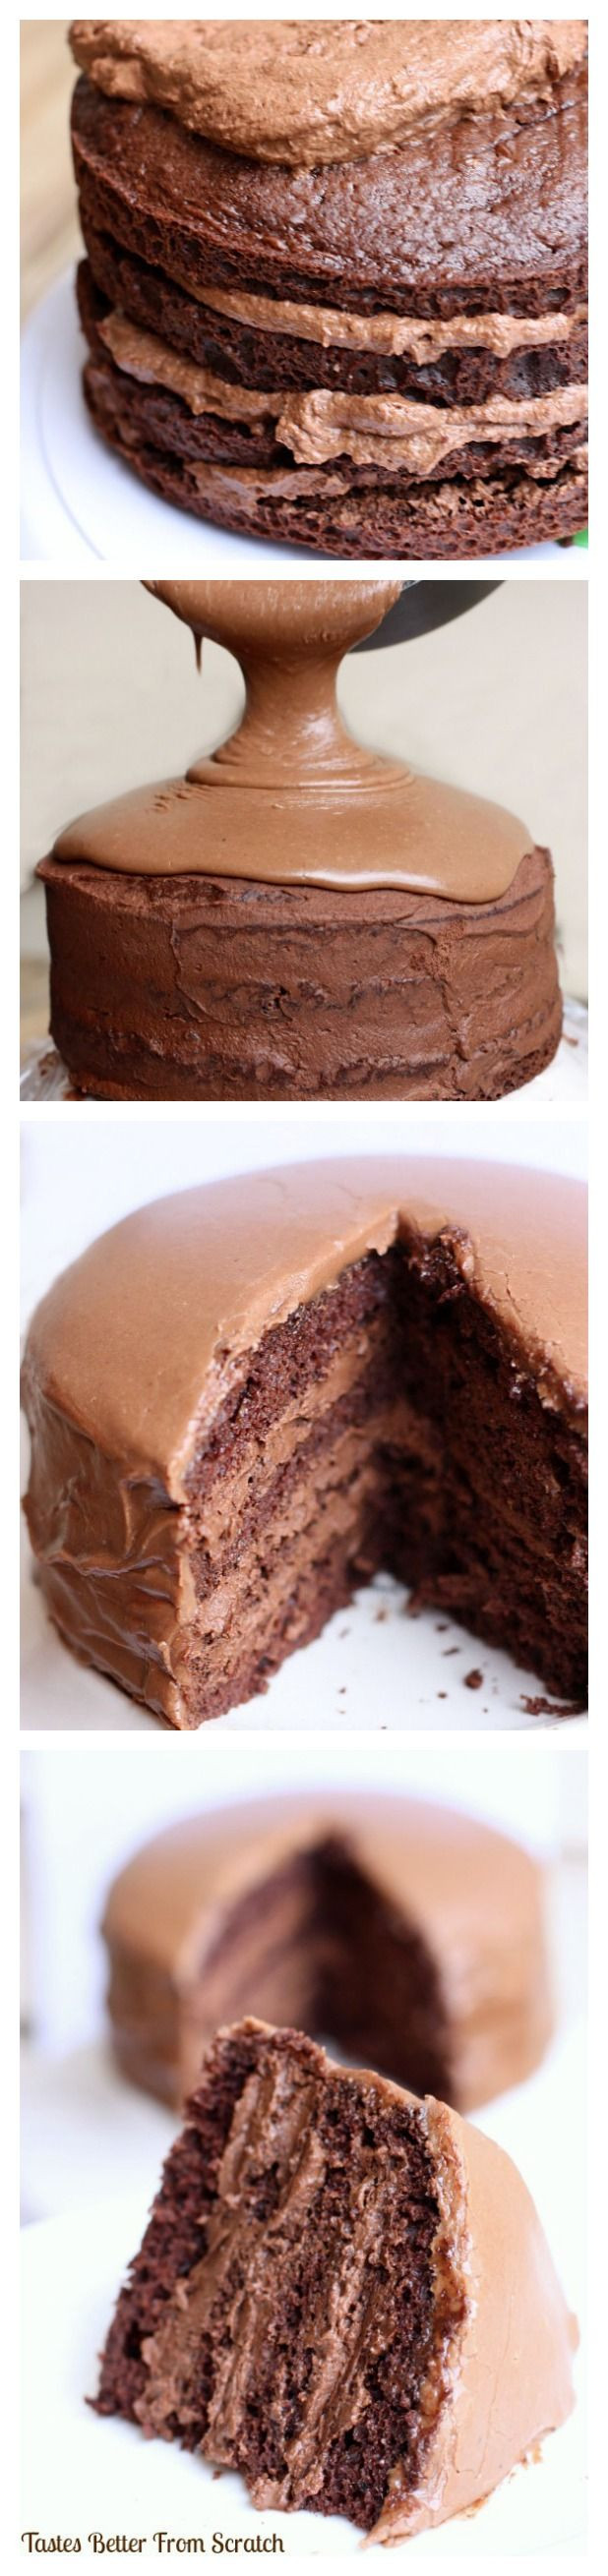 Chocolate Mousse Cake Filling
 Chocolate Cake with Chocolate Mousse Filling